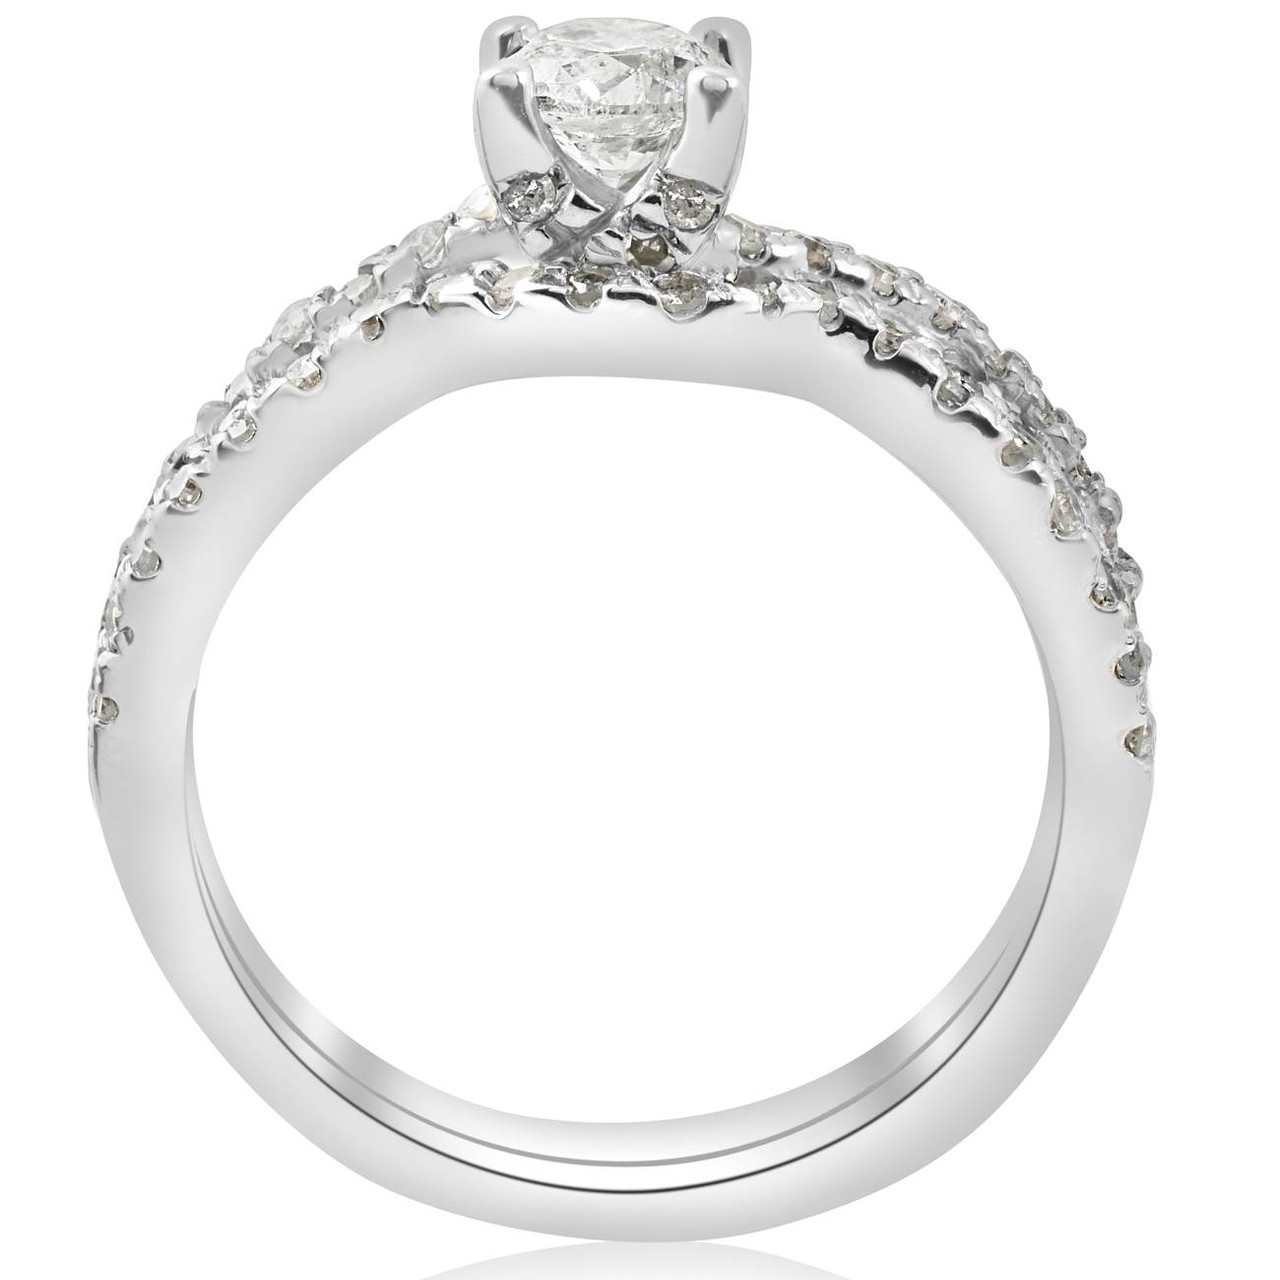 Monogram Infini Engagement Ring, White Gold and Diamond - Categories Q9M34I